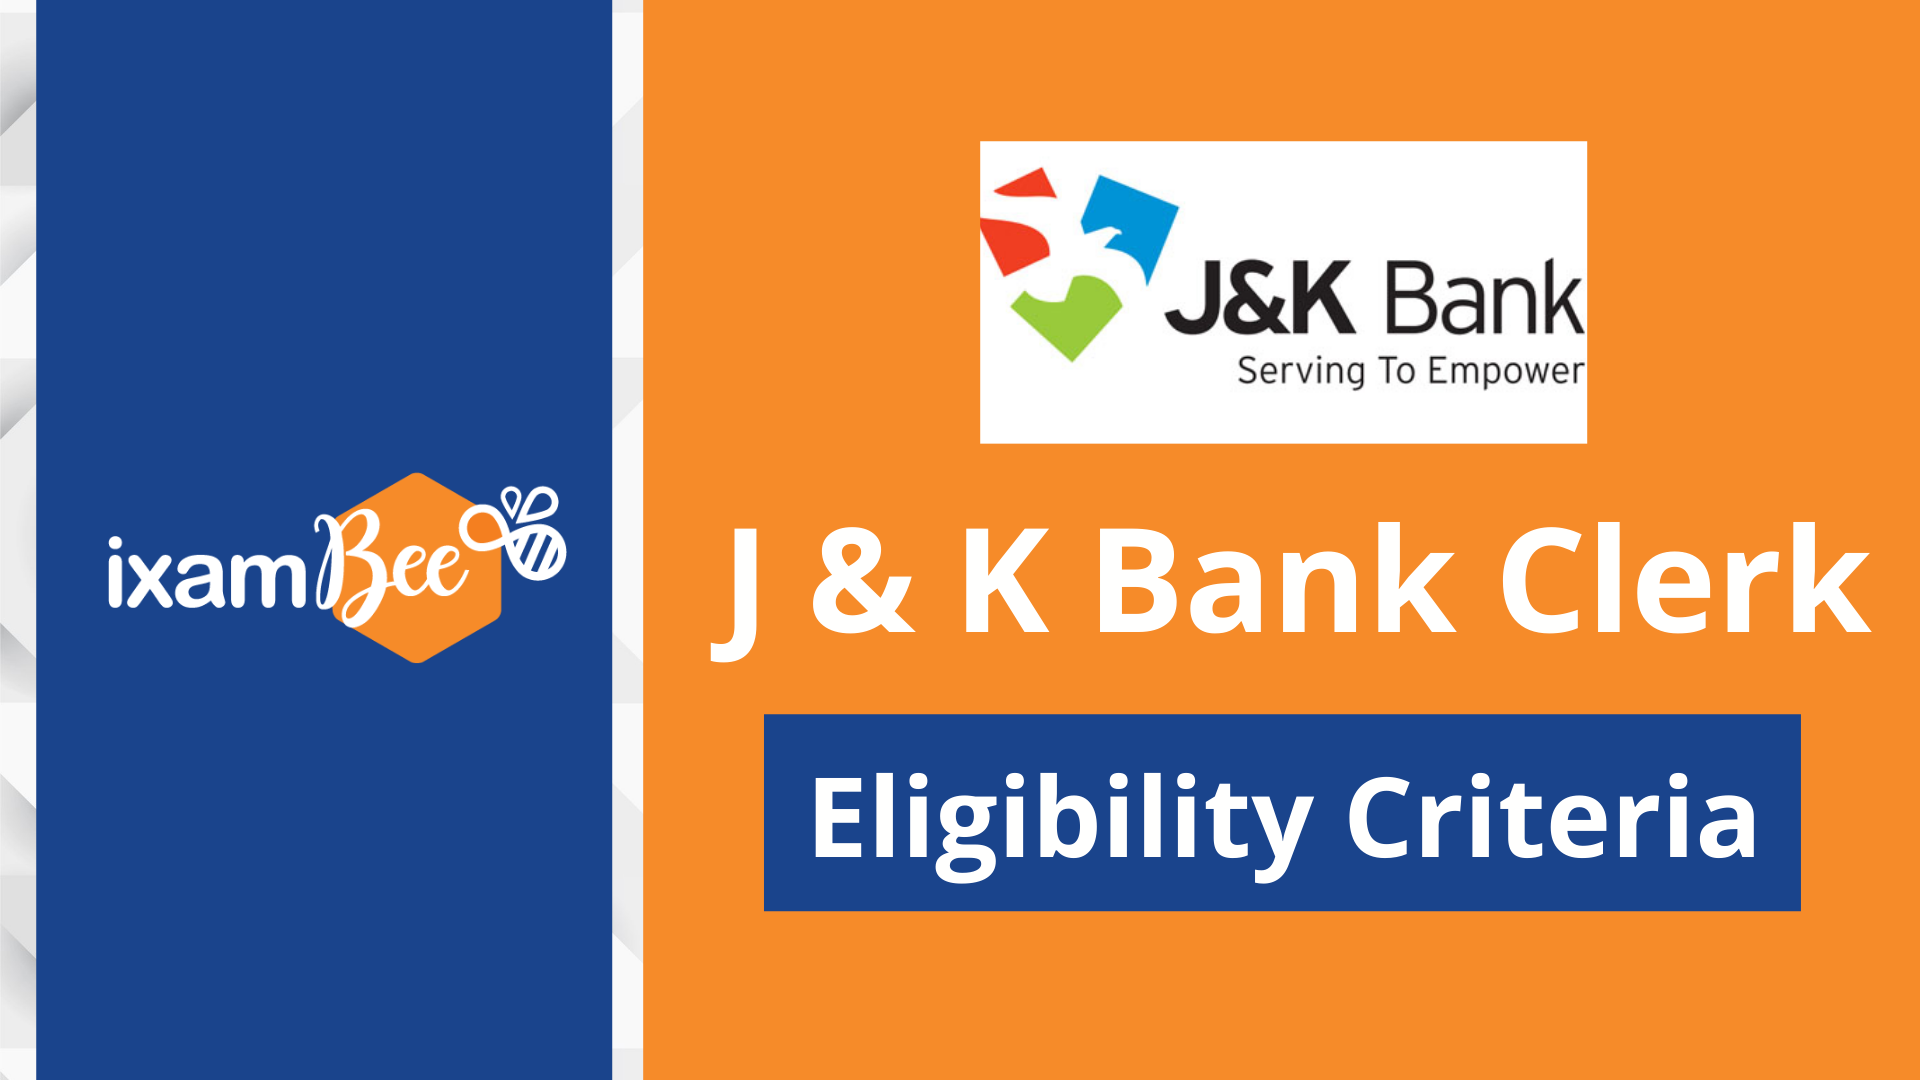 J&K Bank Clerk Eligibility Criteria